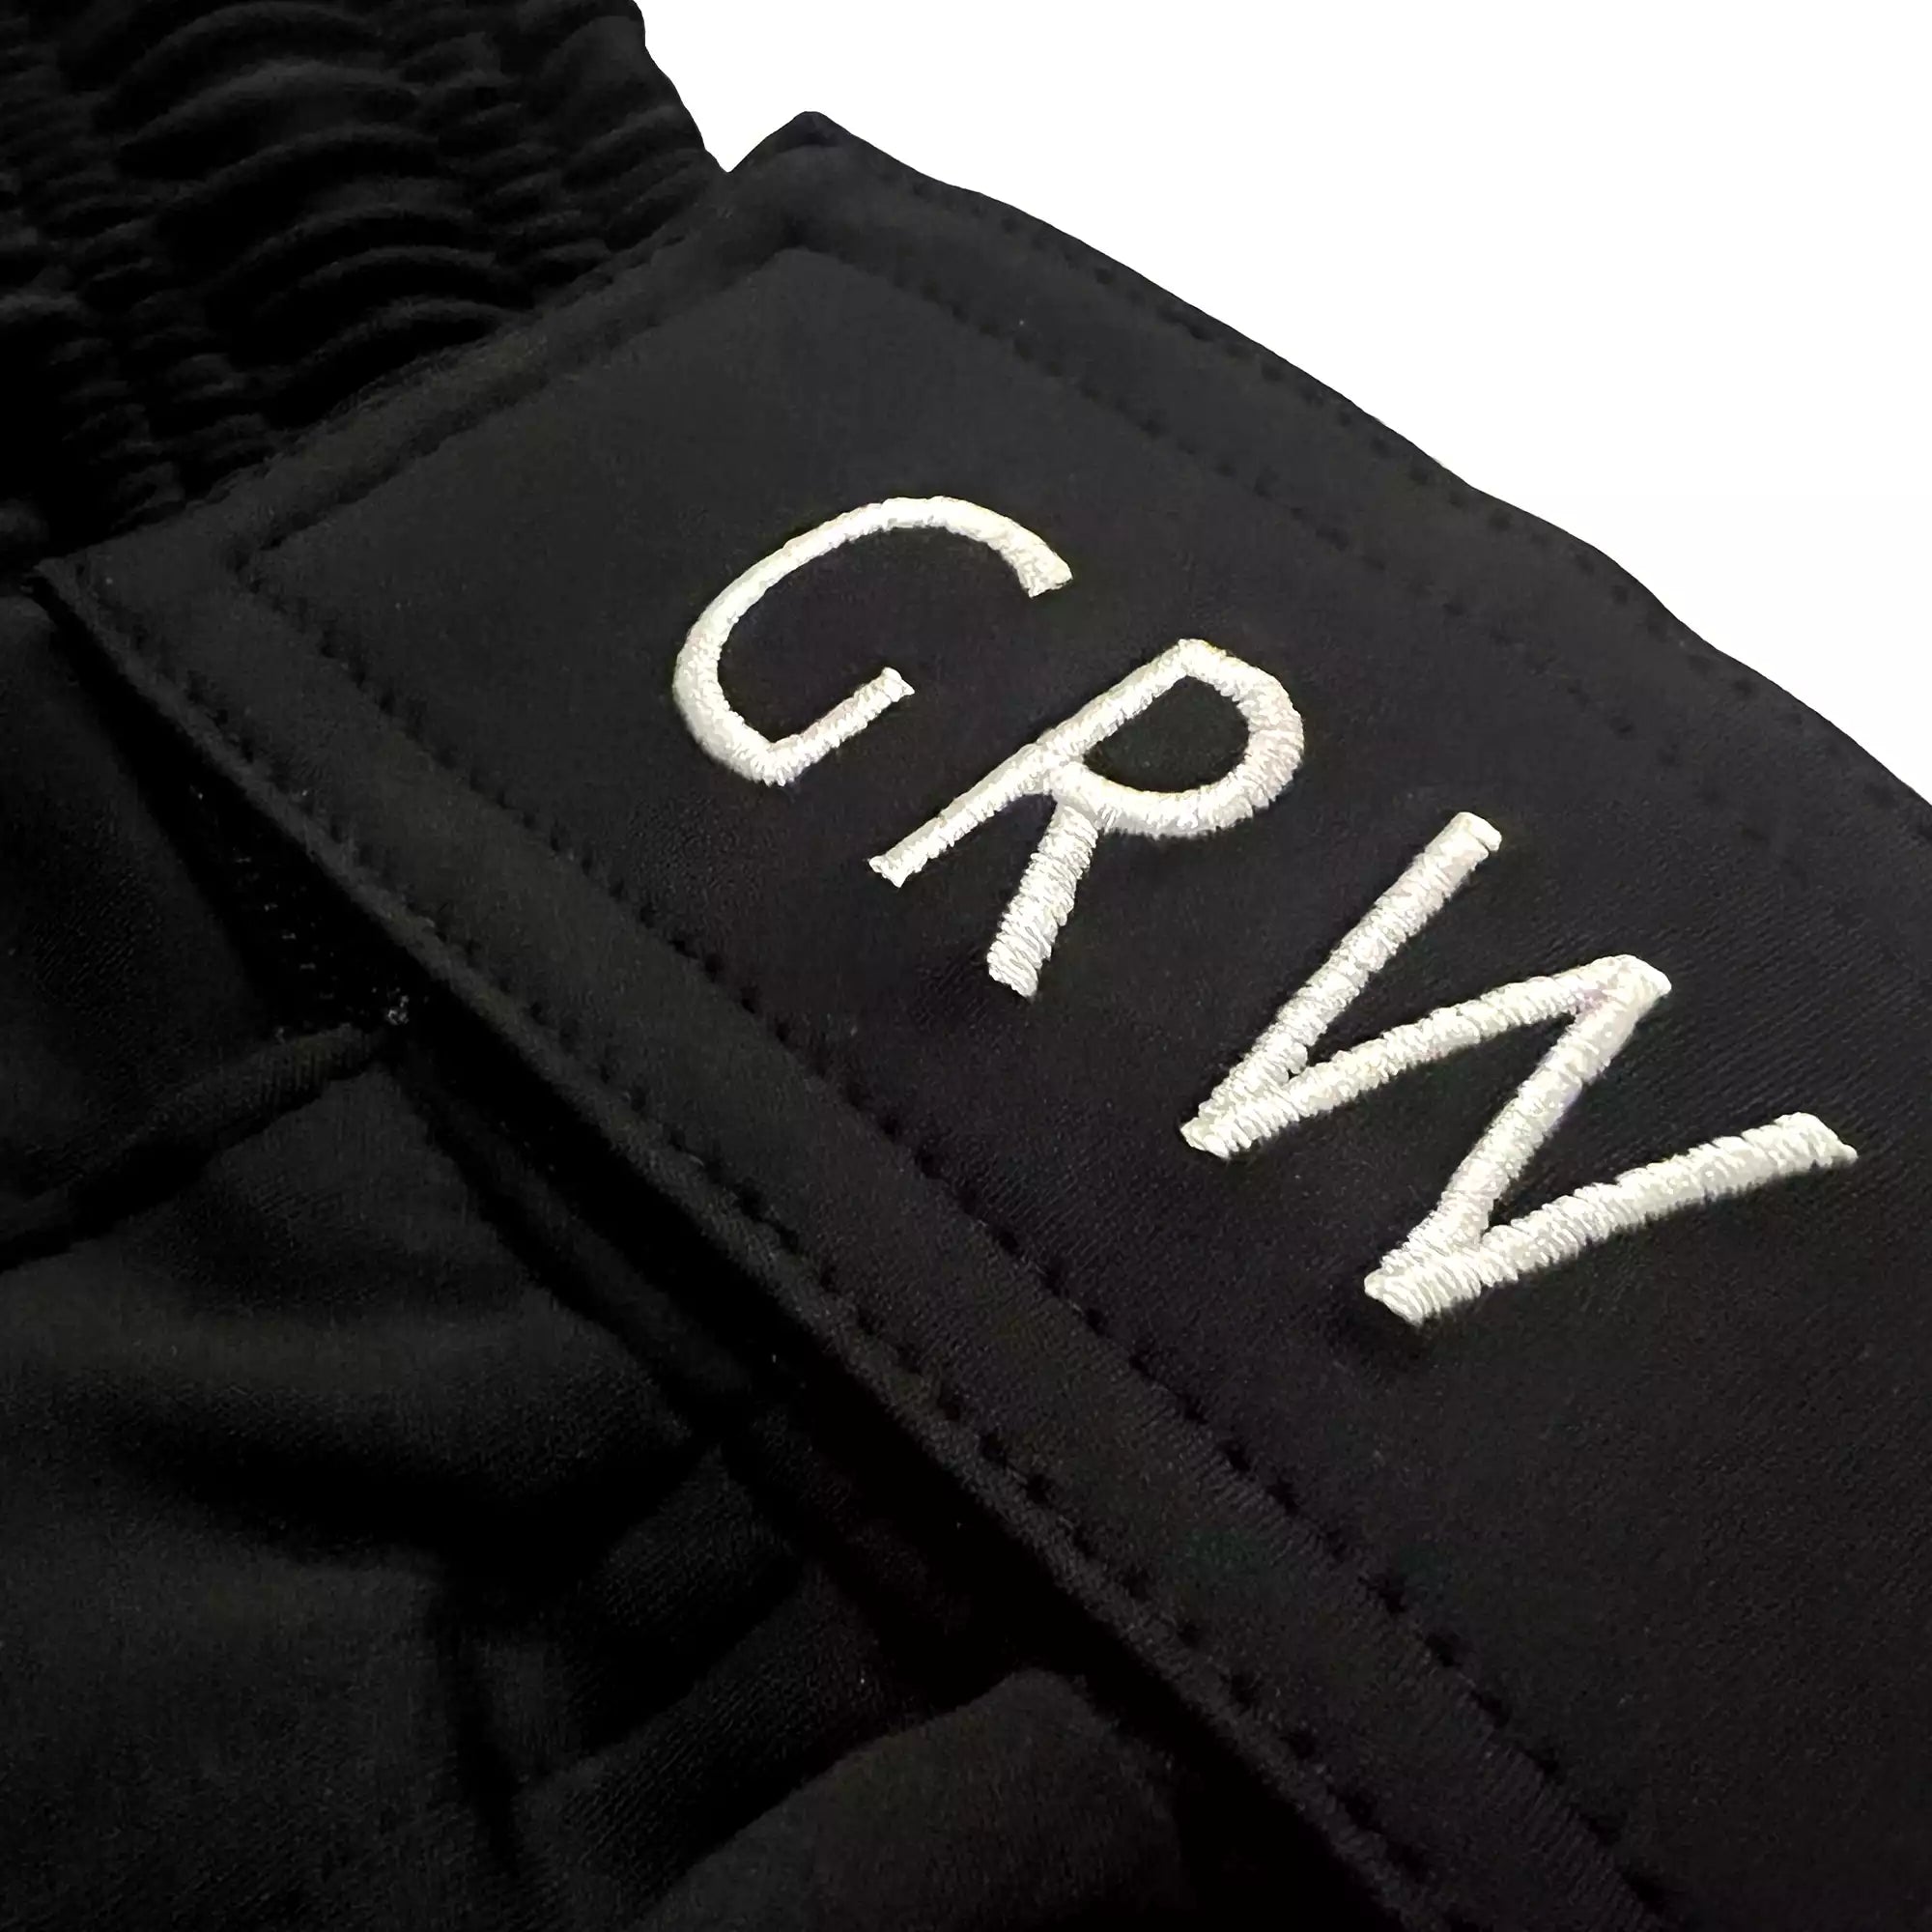 GRW black Jiu Jitsu BJJ Fight grappling shorts four 4 way stretch elastic logo buckle embroidery close up